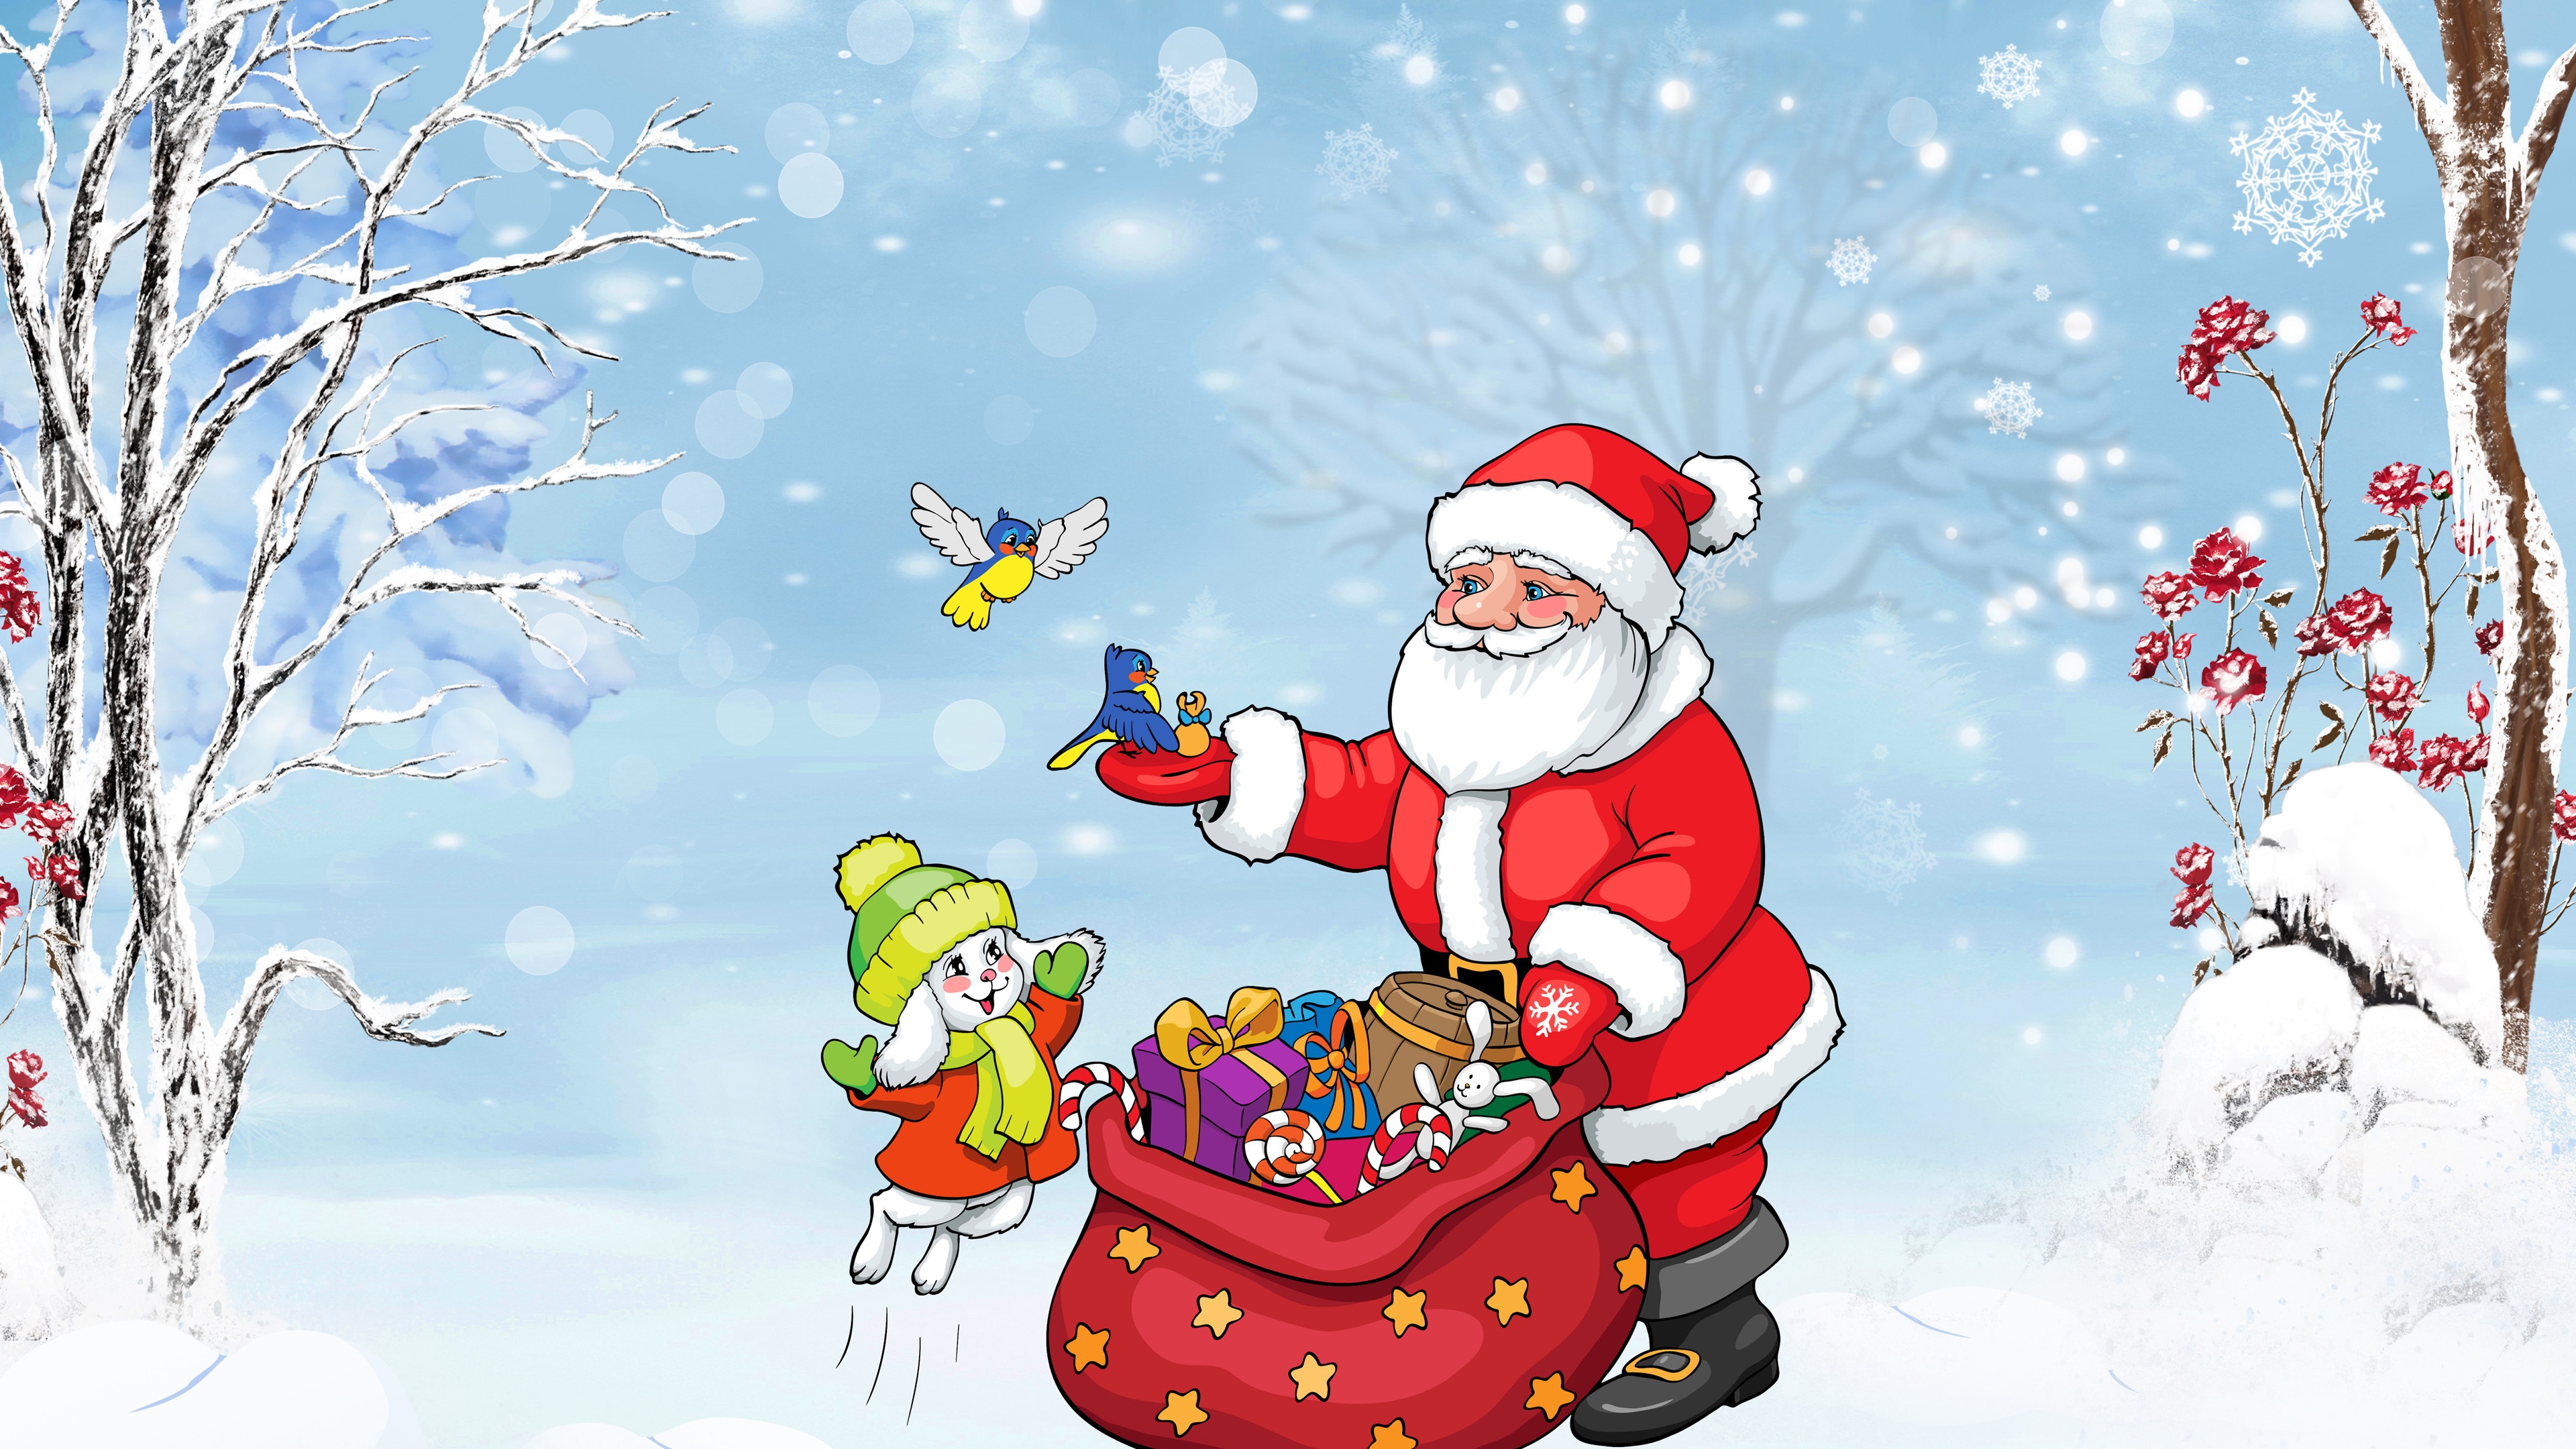 Wallpaper Santa Claus, bunny, birds, bag, gifts, trees, snow